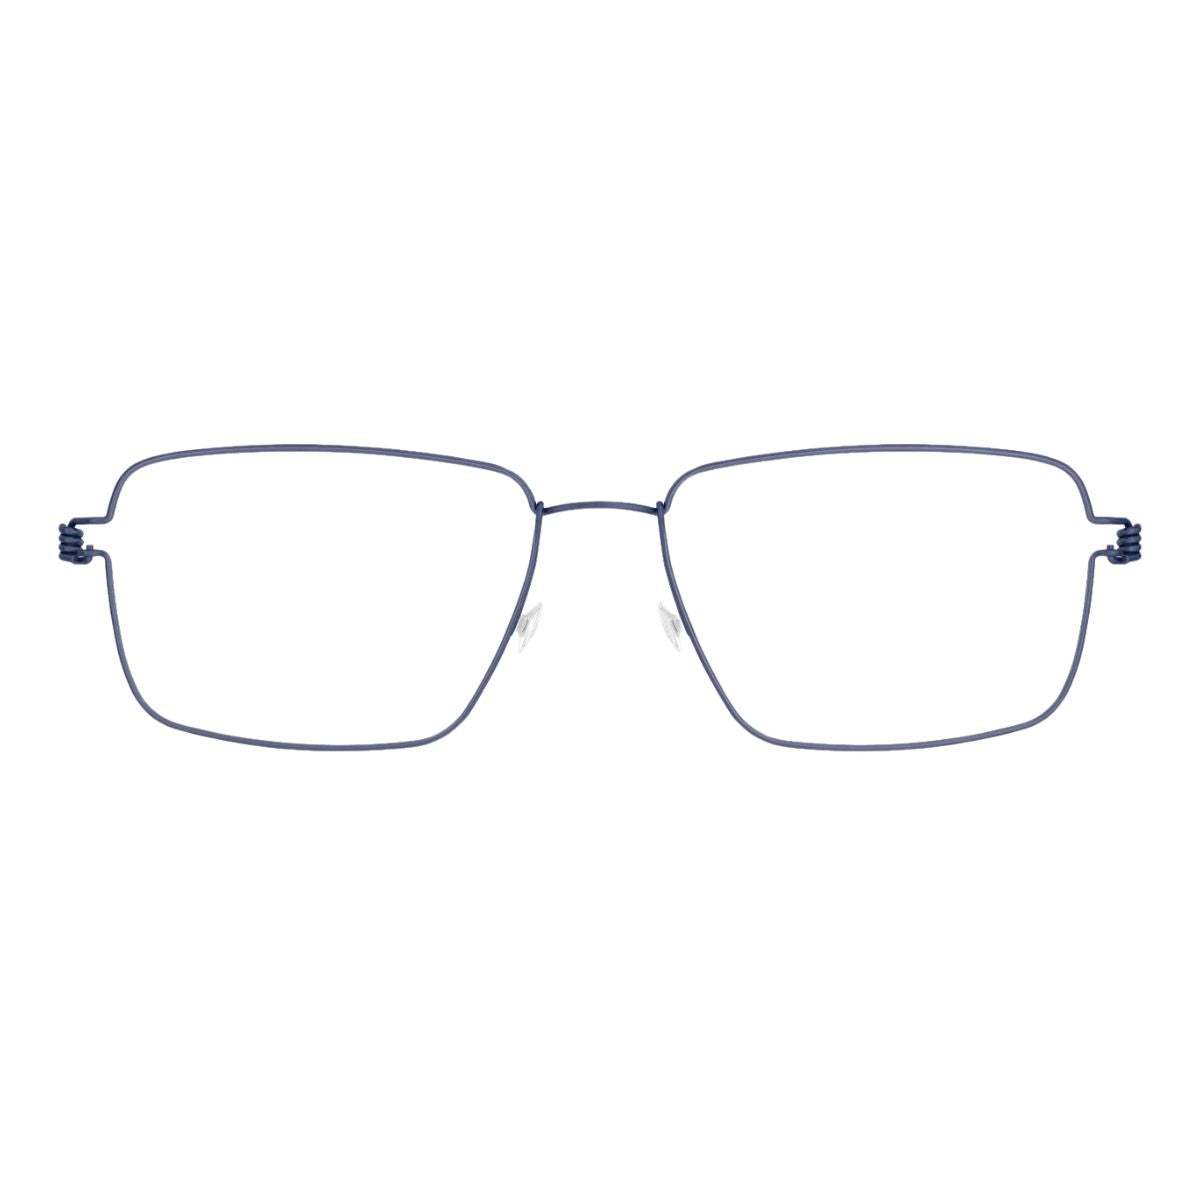 "Shop Latest ARROW Lindberg Eyewear Optical Glasses For Men & Women At Optorium"